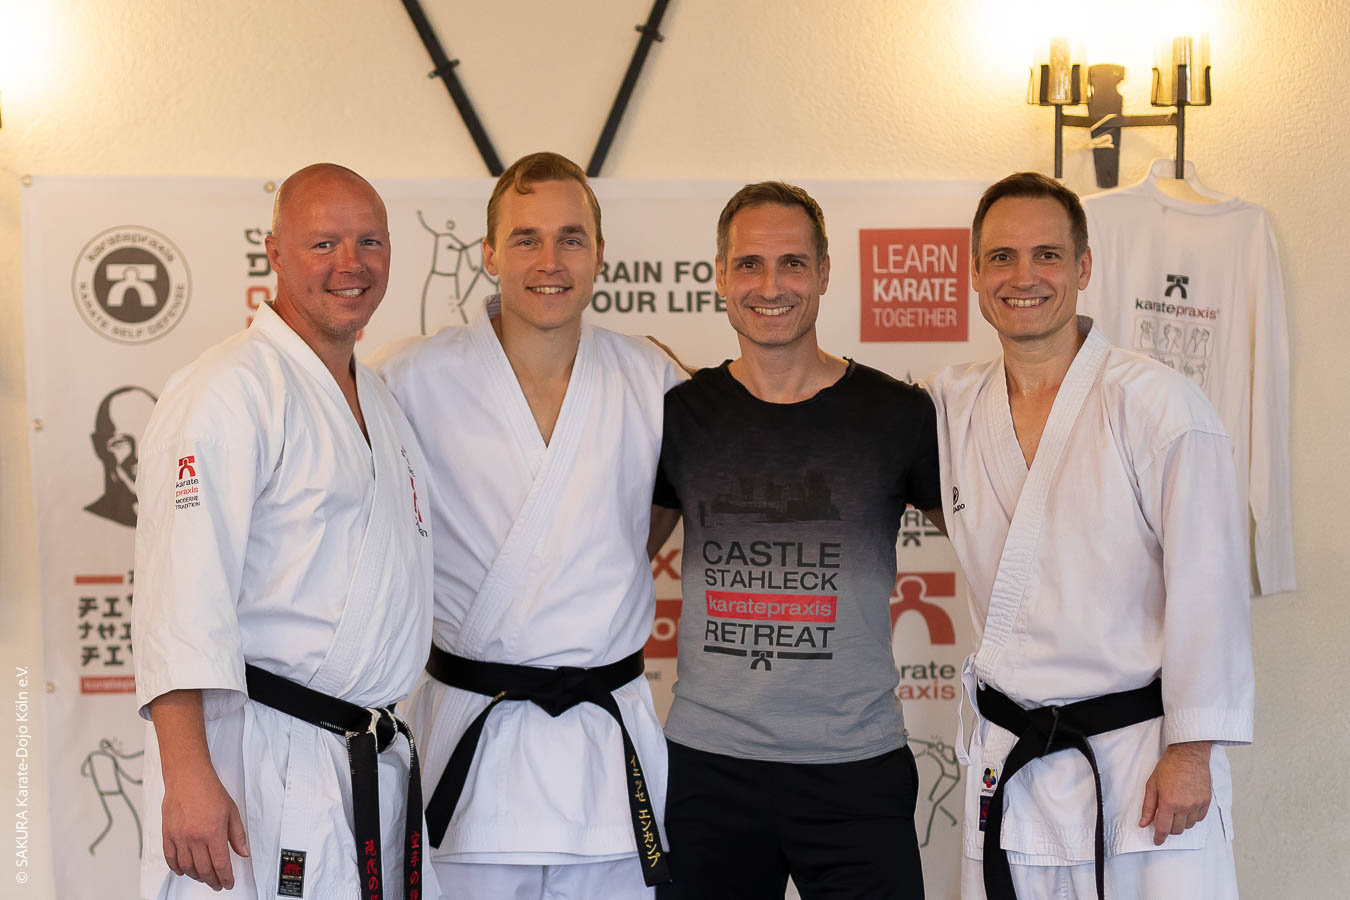 Karatepraxis Retreat auf Burg Stahleck mit Alcis & Ingo